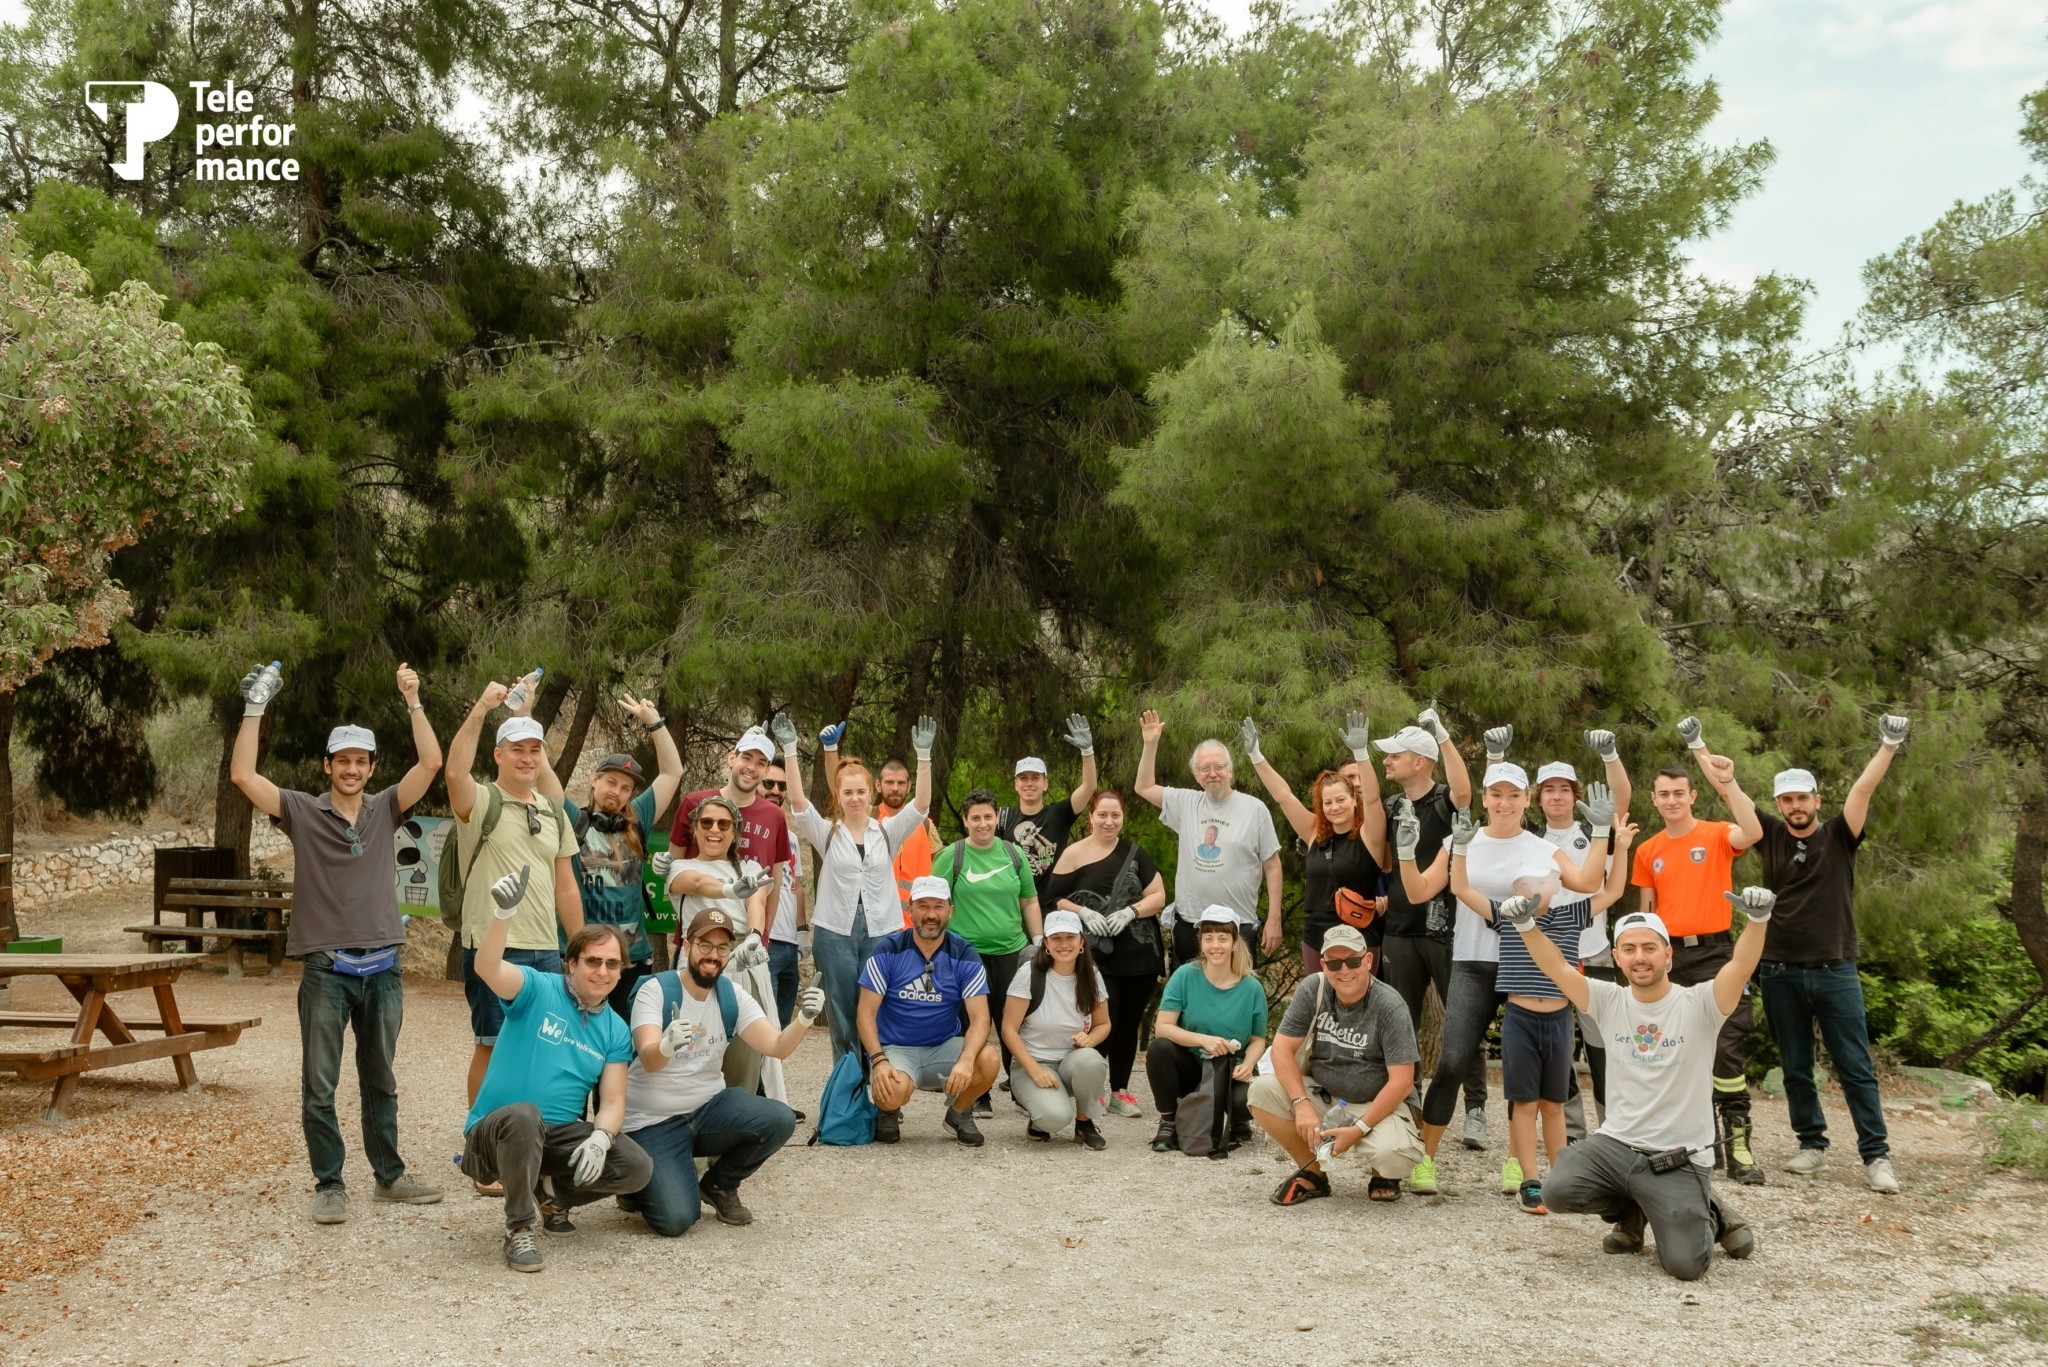 Teleperformance Greece: Φροντίζει περιοχές μεγάλου περιβαλλοντικού ενδιαφέροντος (pic)